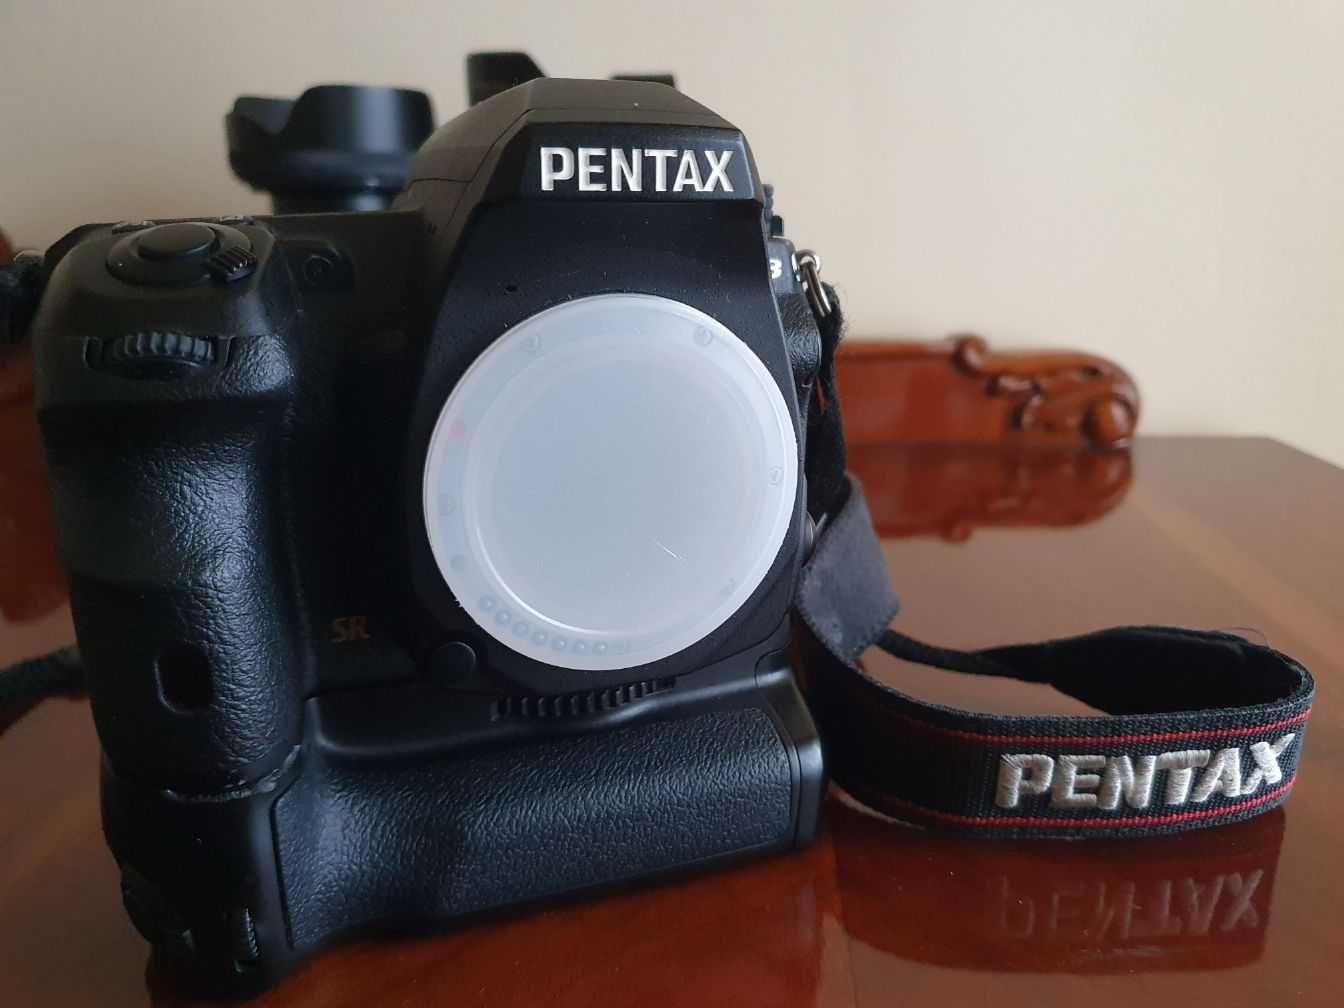 Aparat foto DSLR Pentax K3 ieftin, optional obiective si accesorii